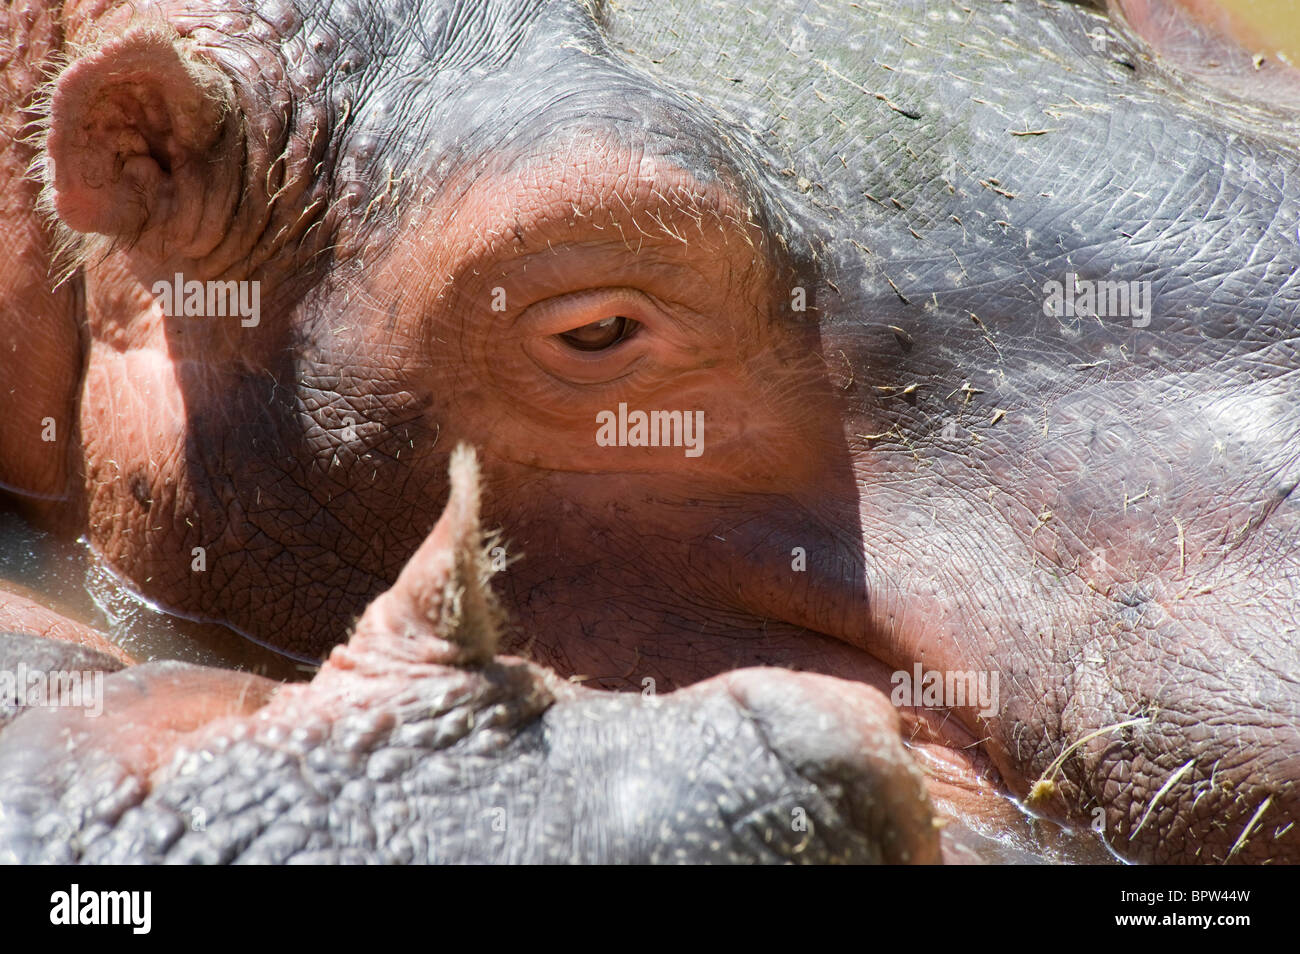 Closeup of a Hippopotamus's eye Stock Photo